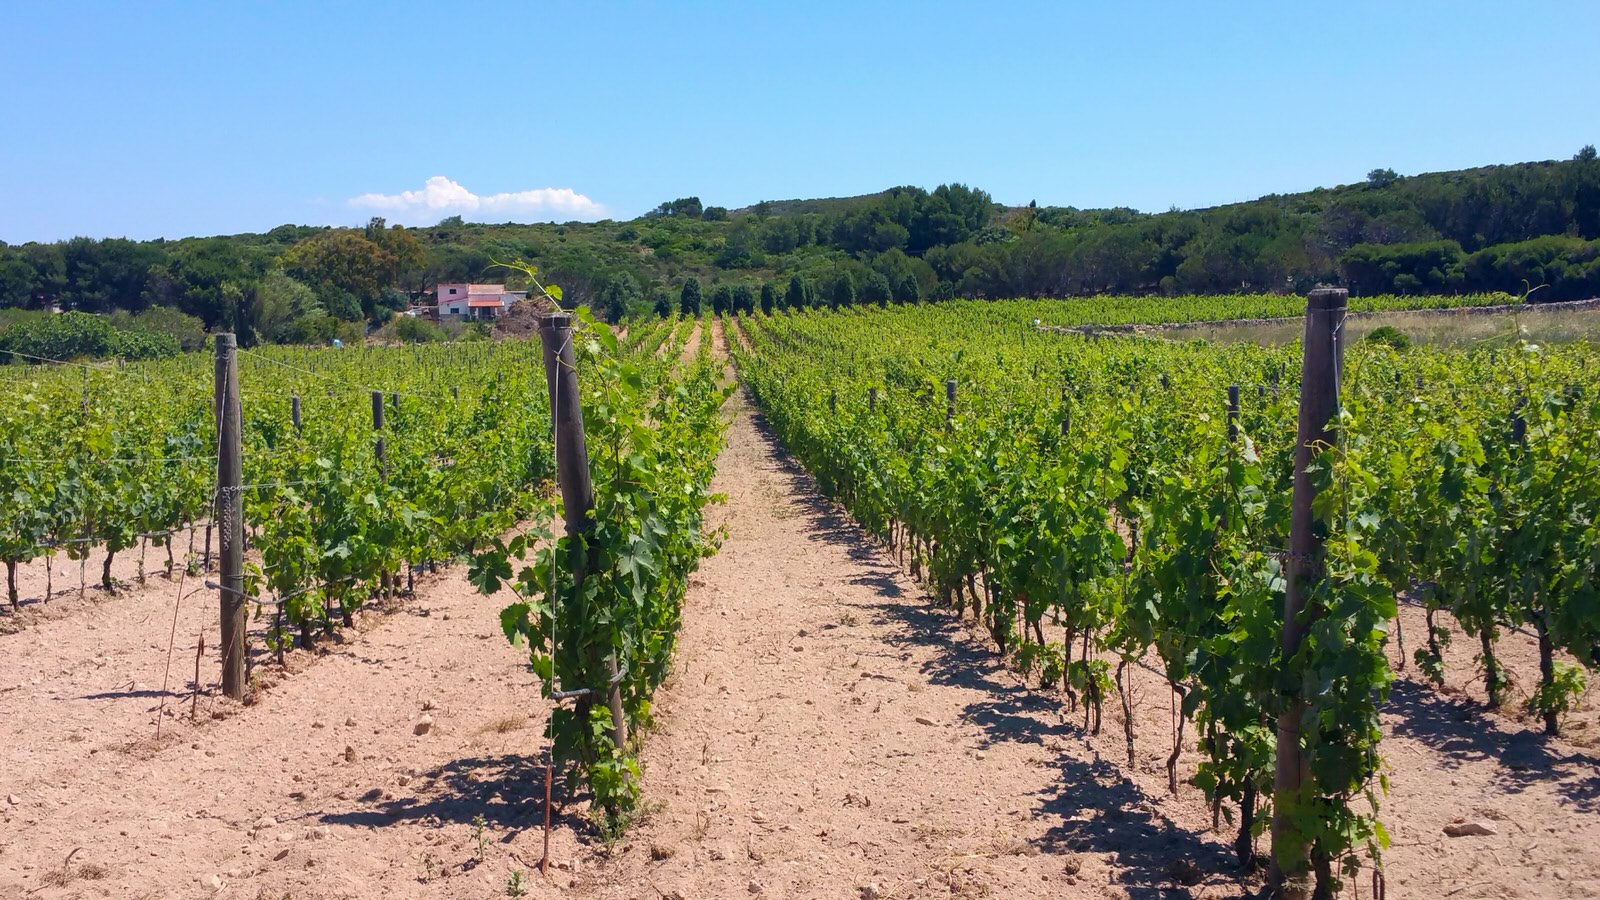 A vineyard in Sardinia, Italy.